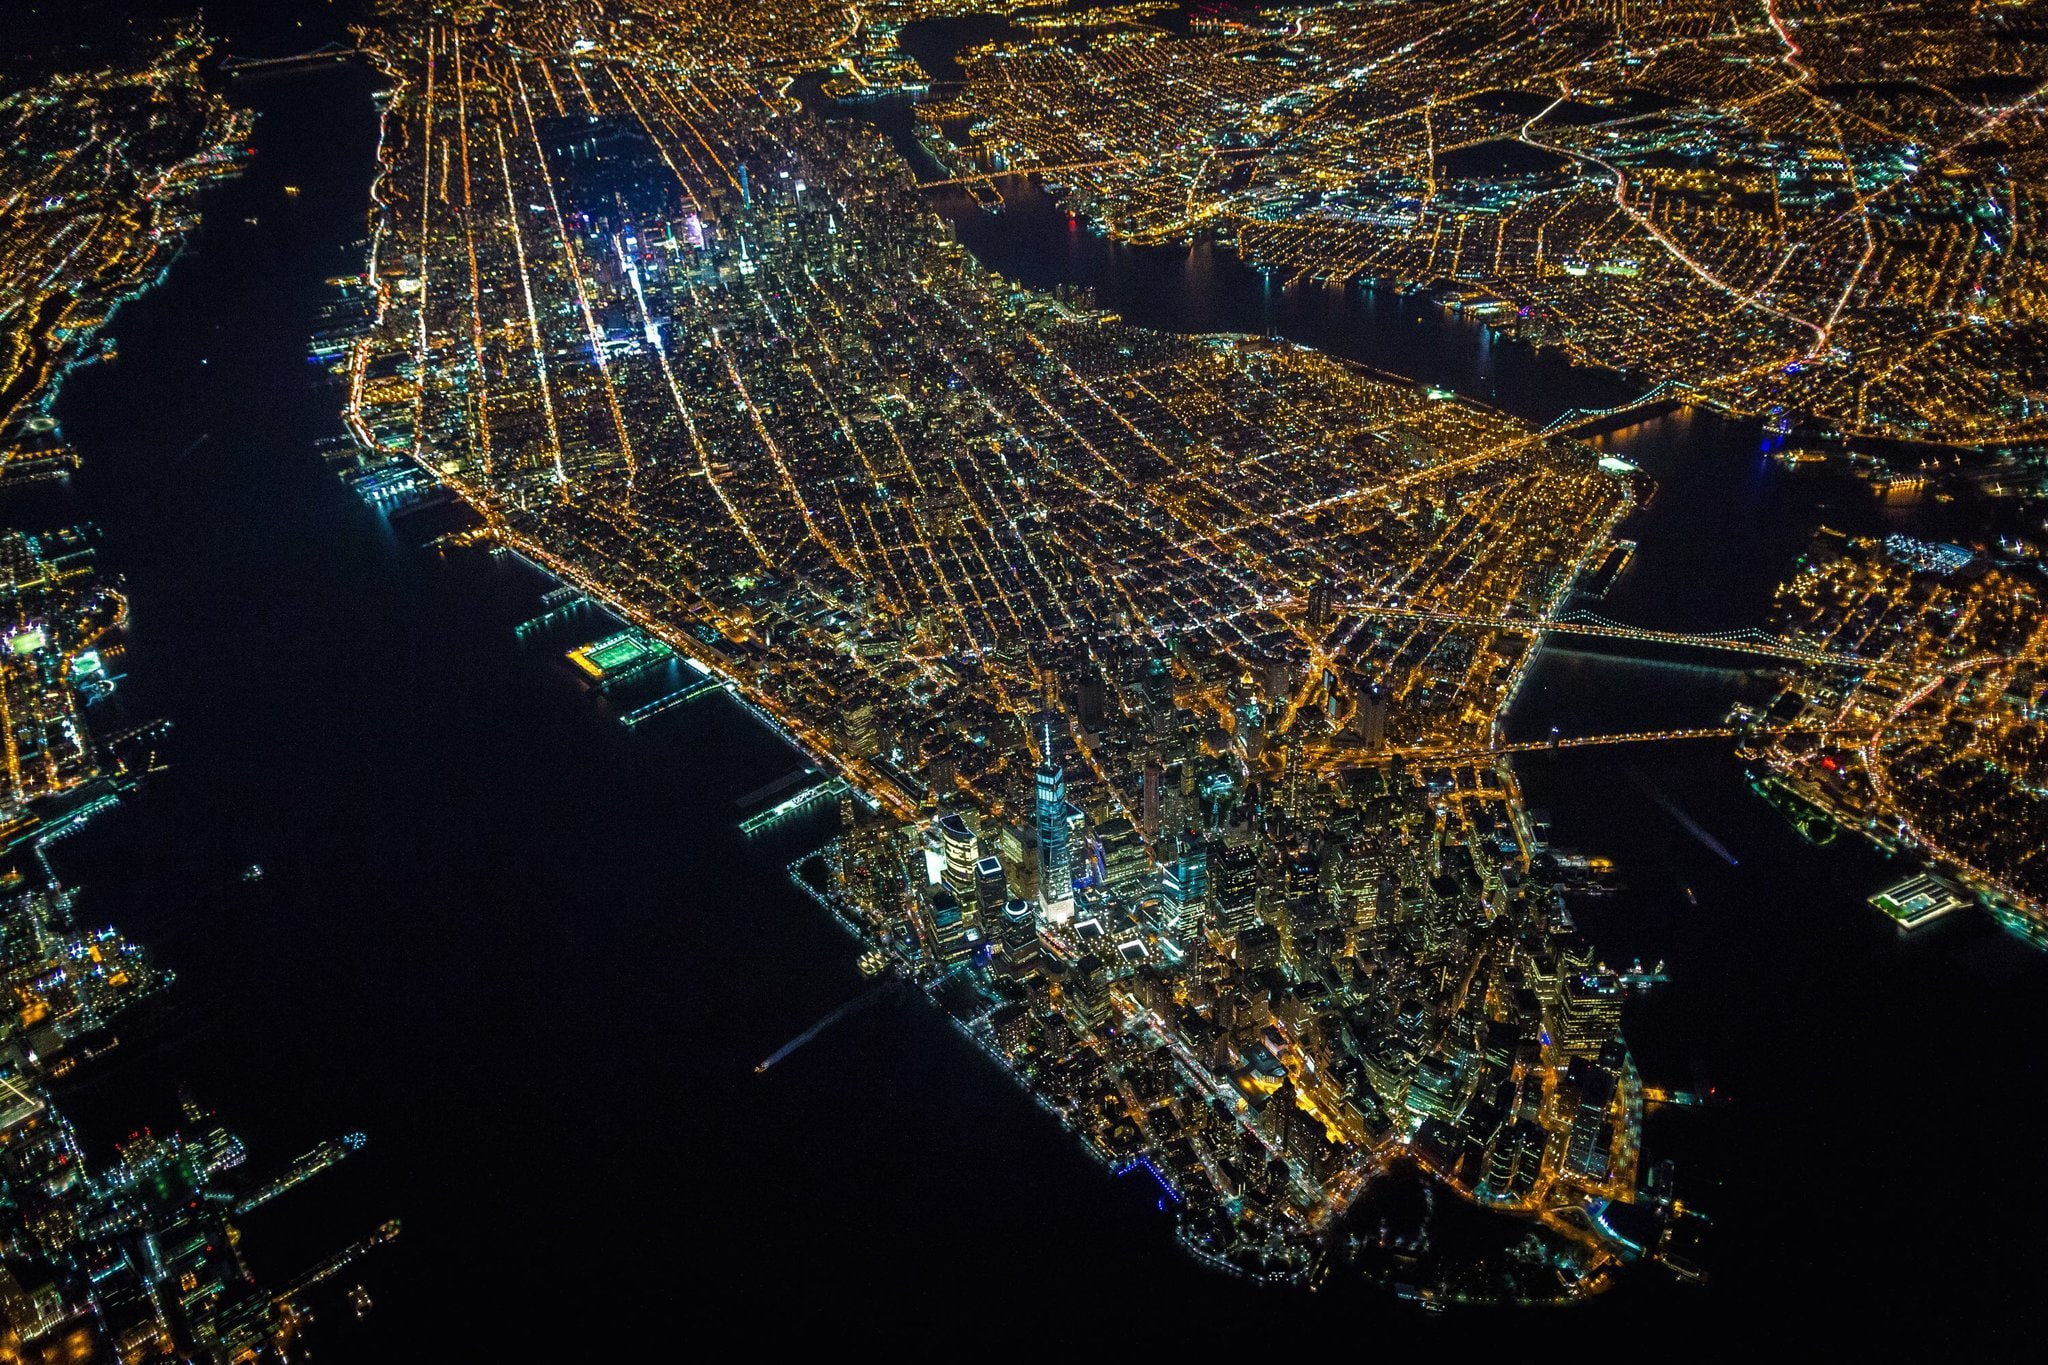 lights, USA, United States, night, New York, Manhattan, NYC